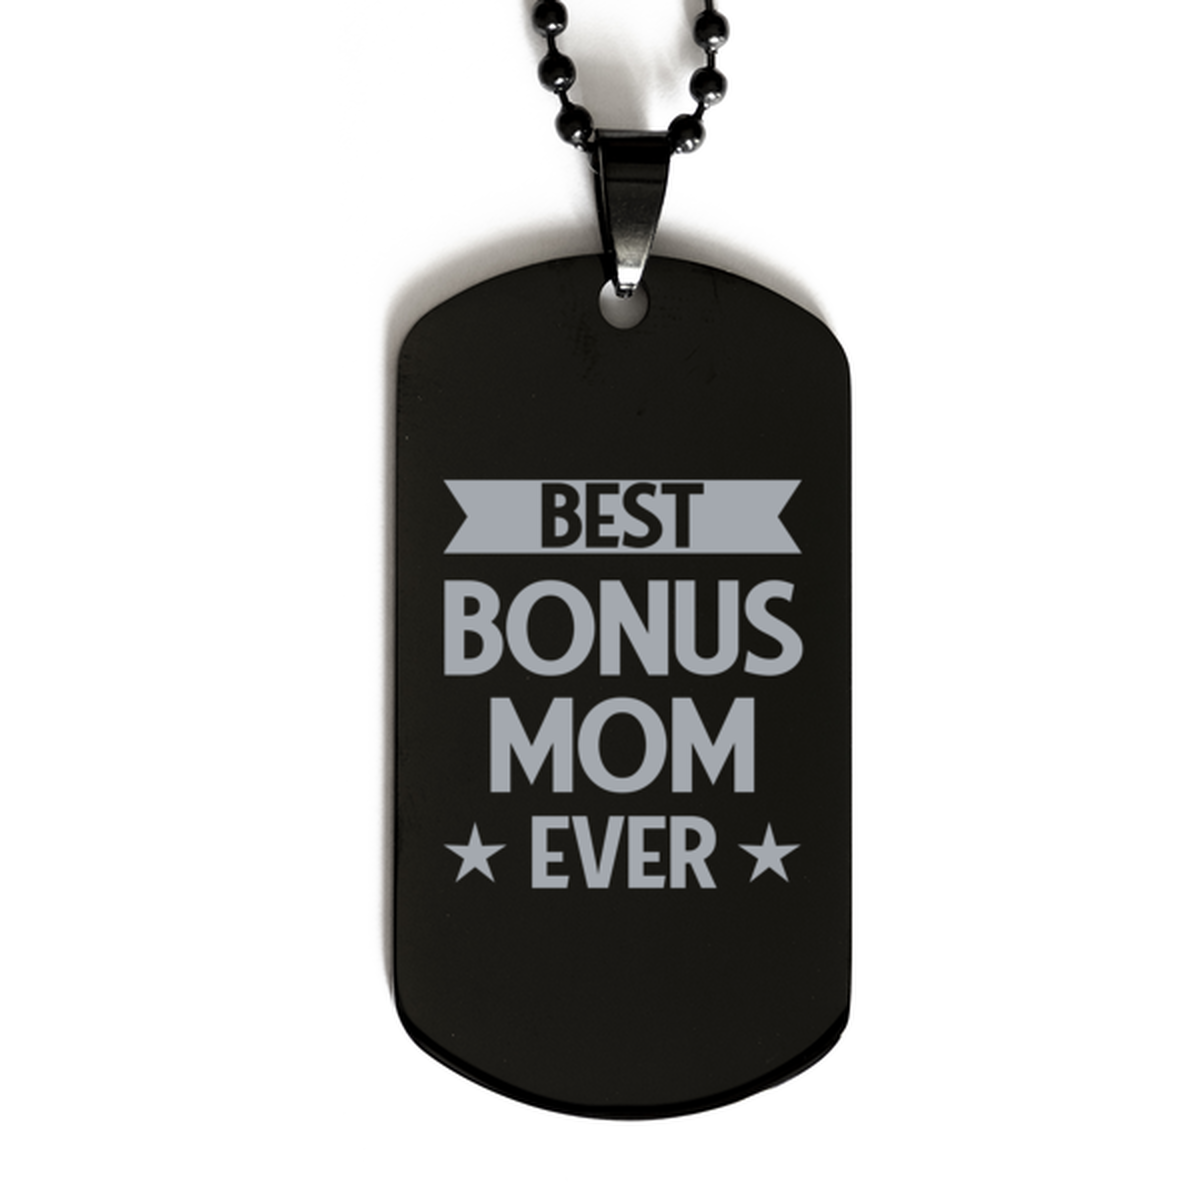 Best Bonus Mom Ever Bonus Mom Gifts, Funny Black Dog Tag For Bonus Mom, Birthday Family Presents Engraved Necklace For Women